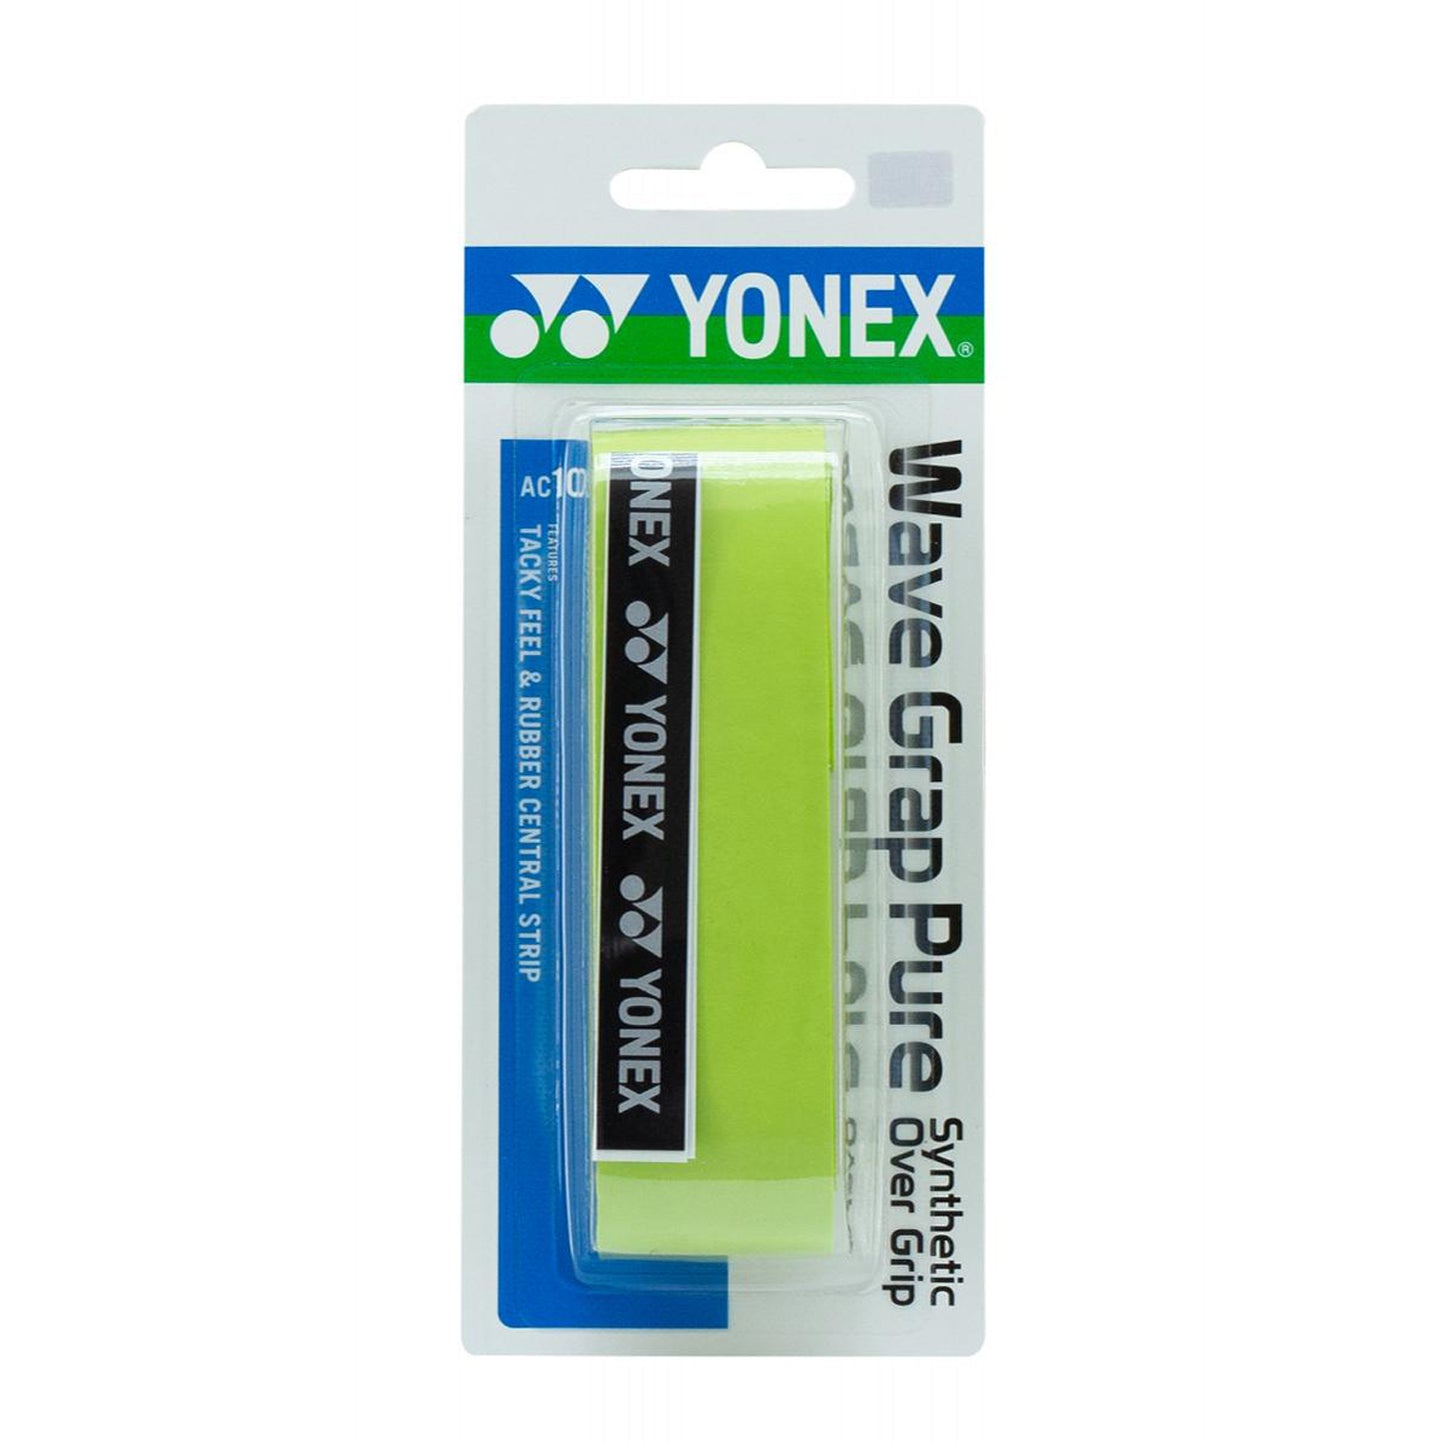 Yonex AC108WEX Wave Grap Pure Synthetic Over Grip - Best Price online Prokicksports.com